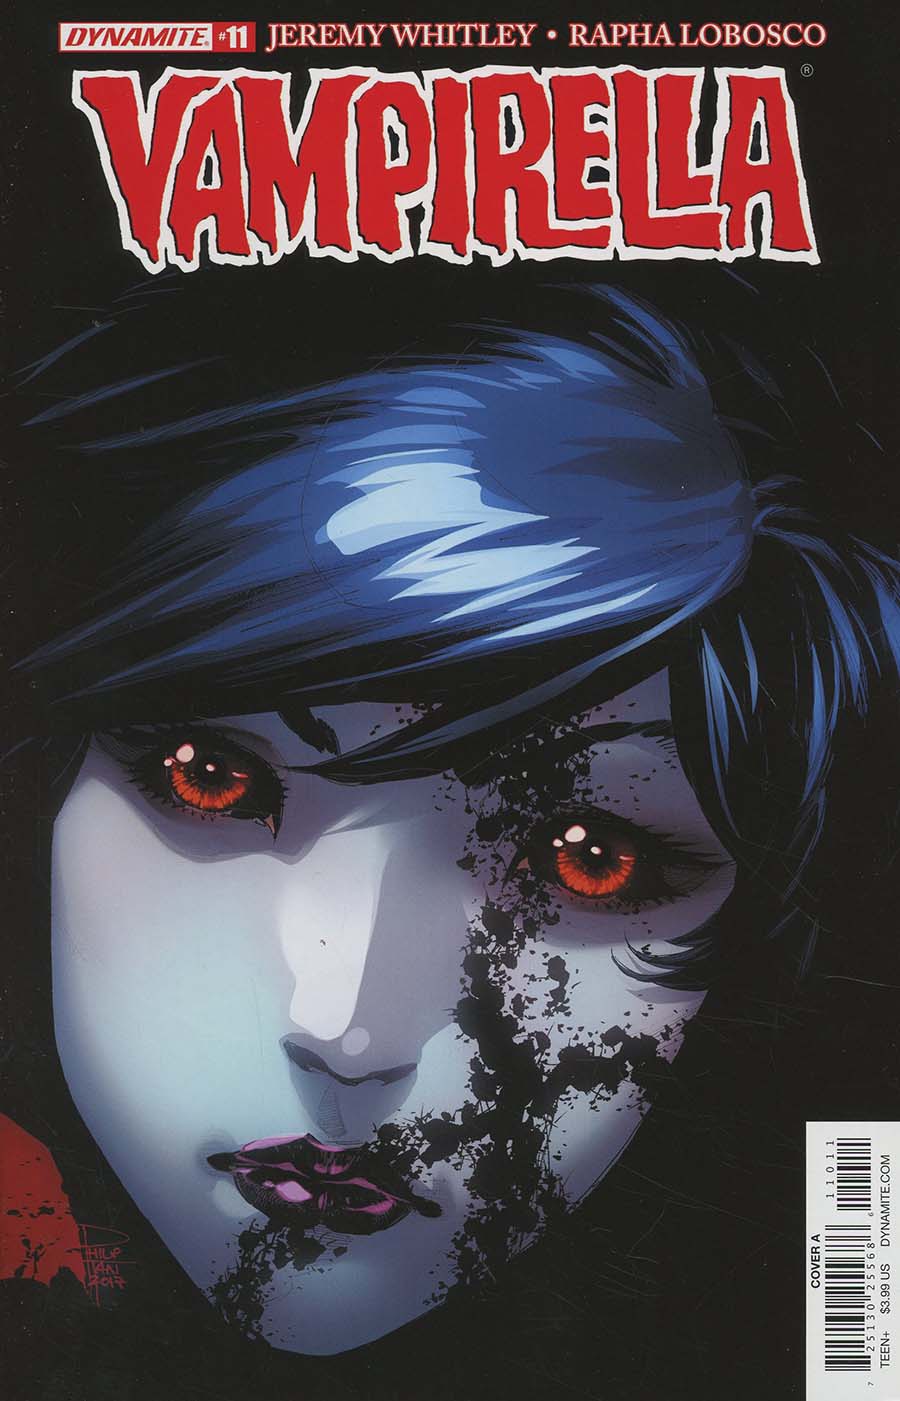 Vampirella Vol 7 #11 Cover A Regular Philip Tan Cover